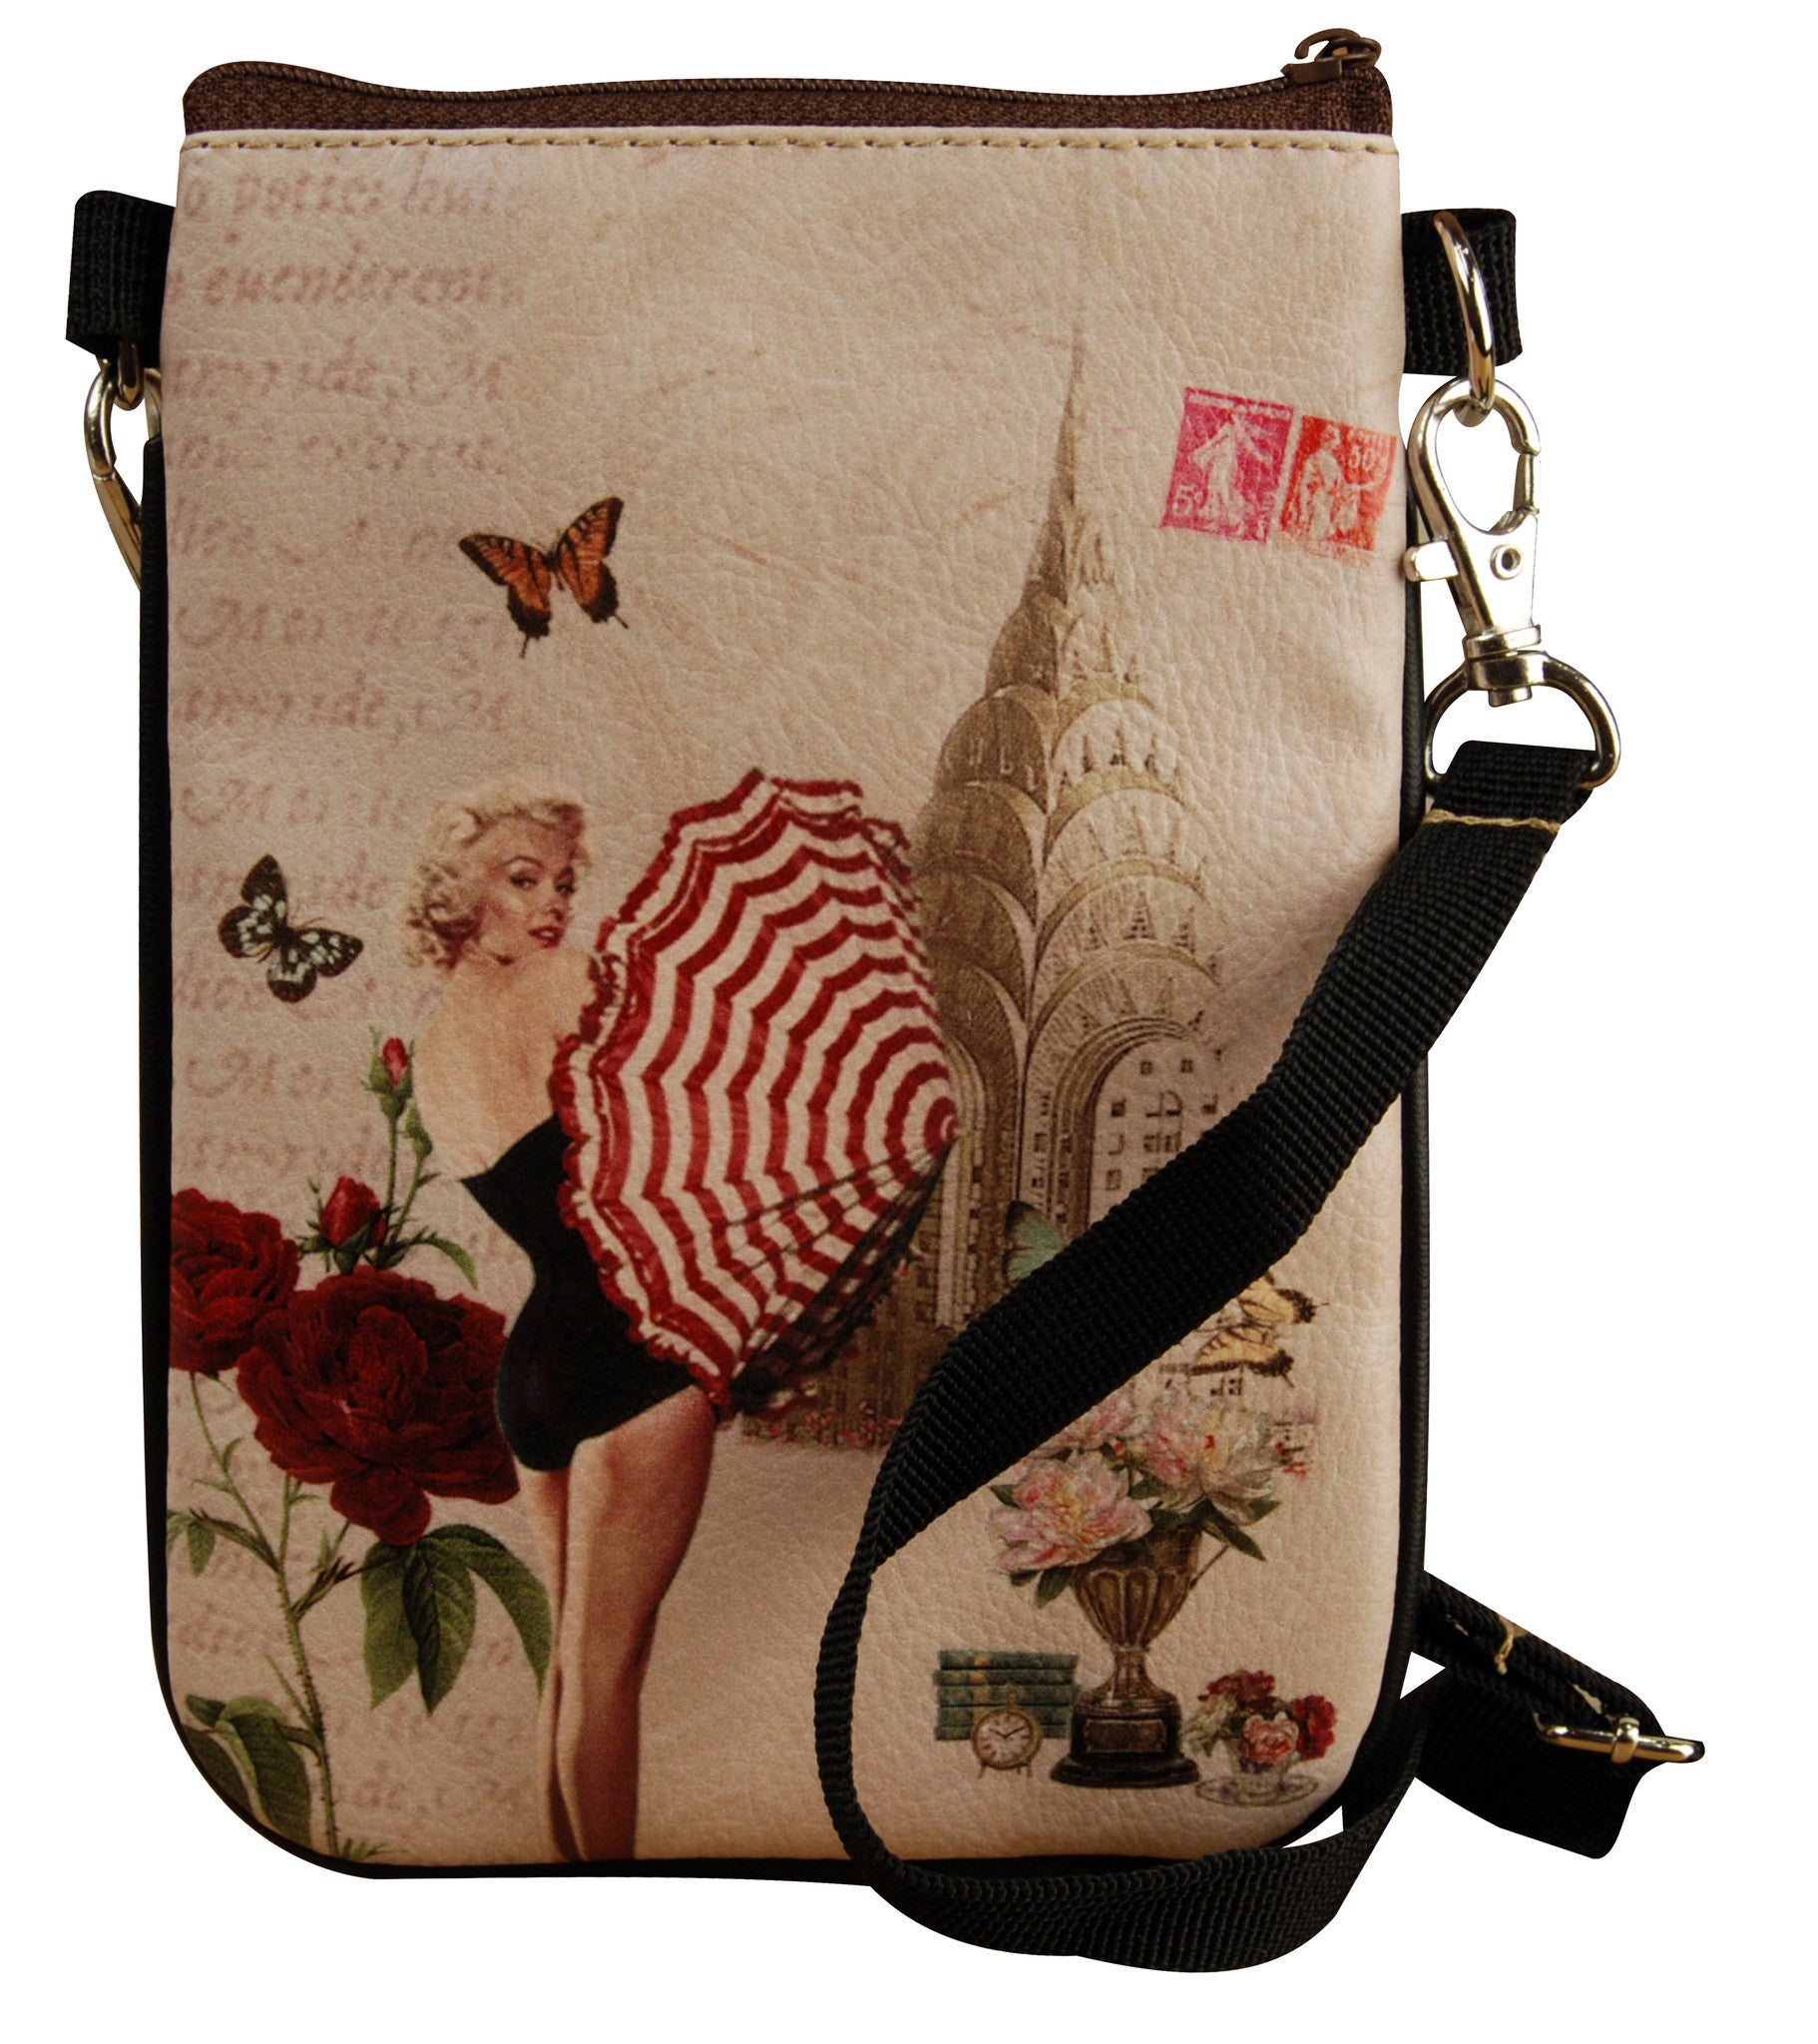 Ladies shoulder bag with strap